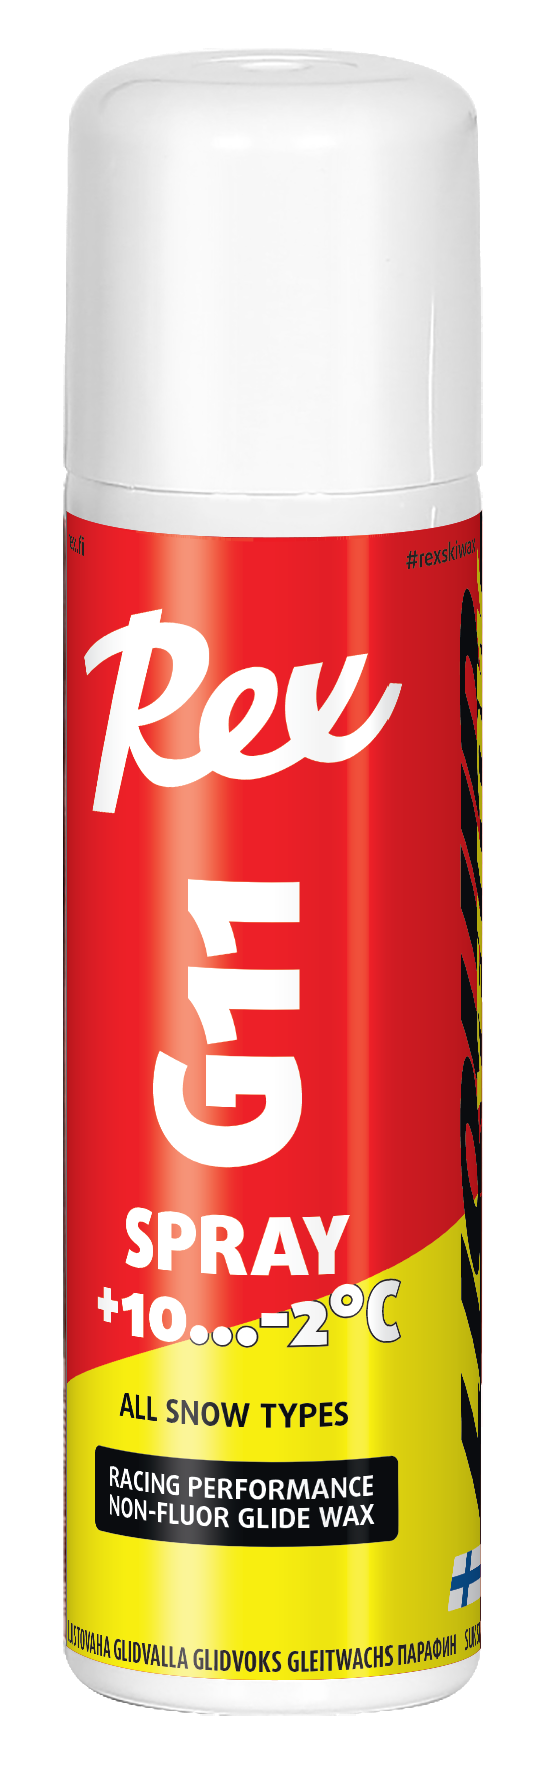 rex g11 spray 150ml - pioneer midwest